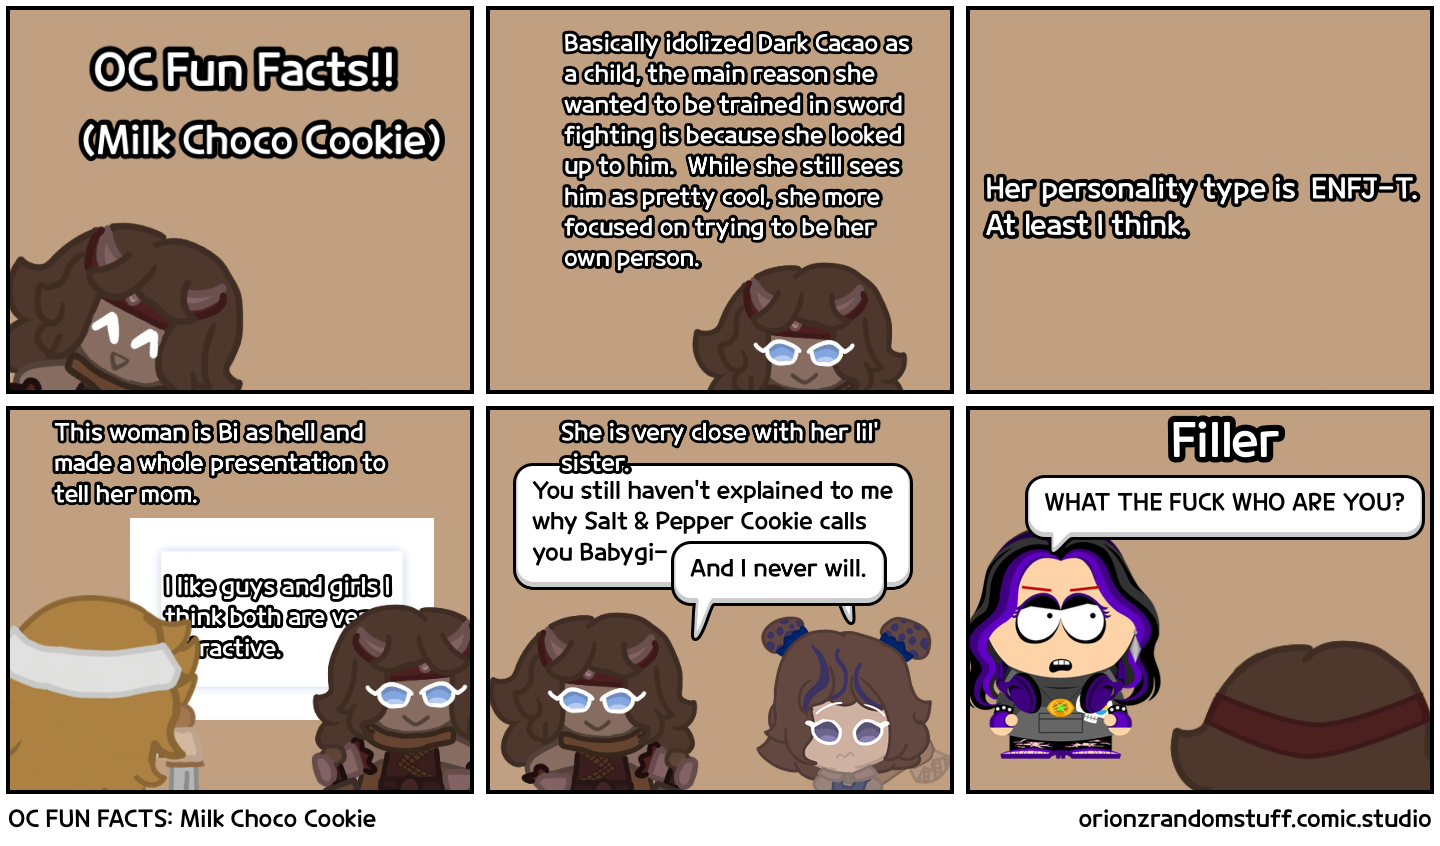 OC FUN FACTS: Milk Choco Cookie